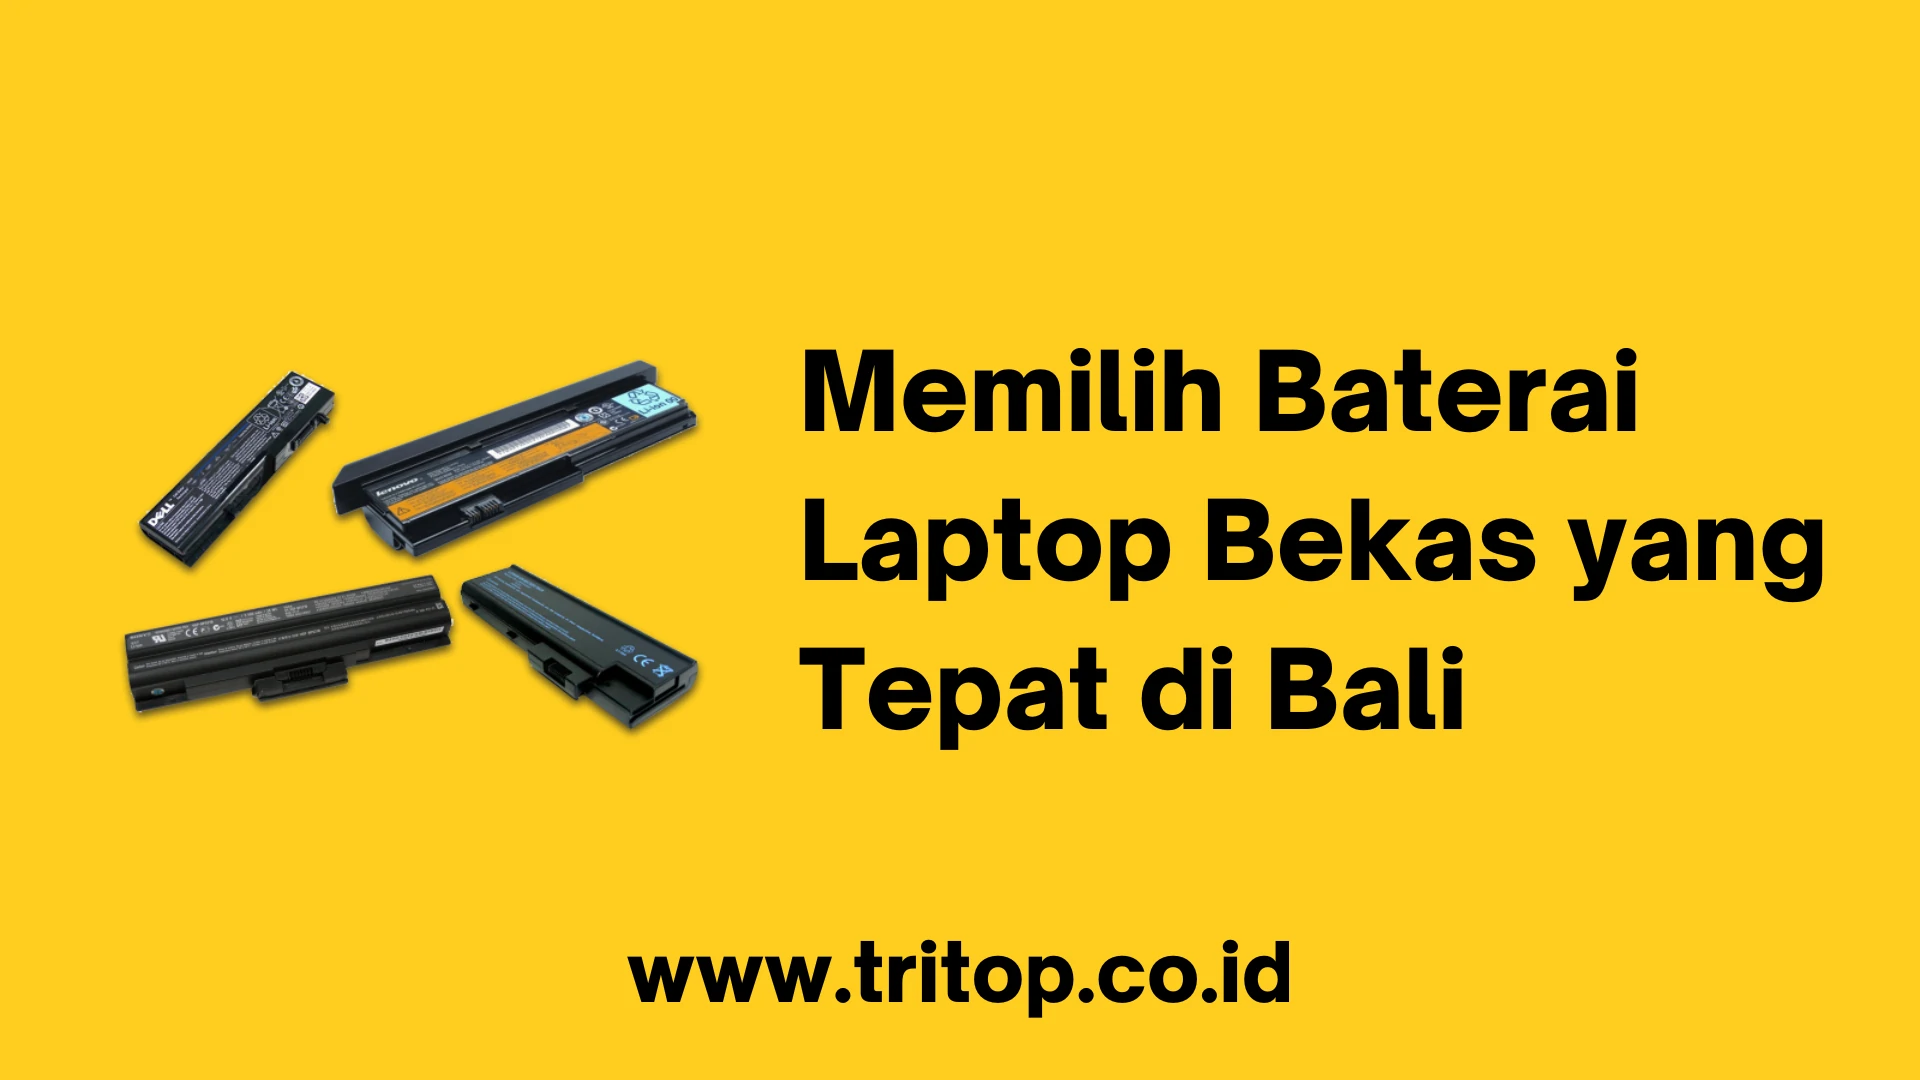 Baterai Laptop Bekas Bali